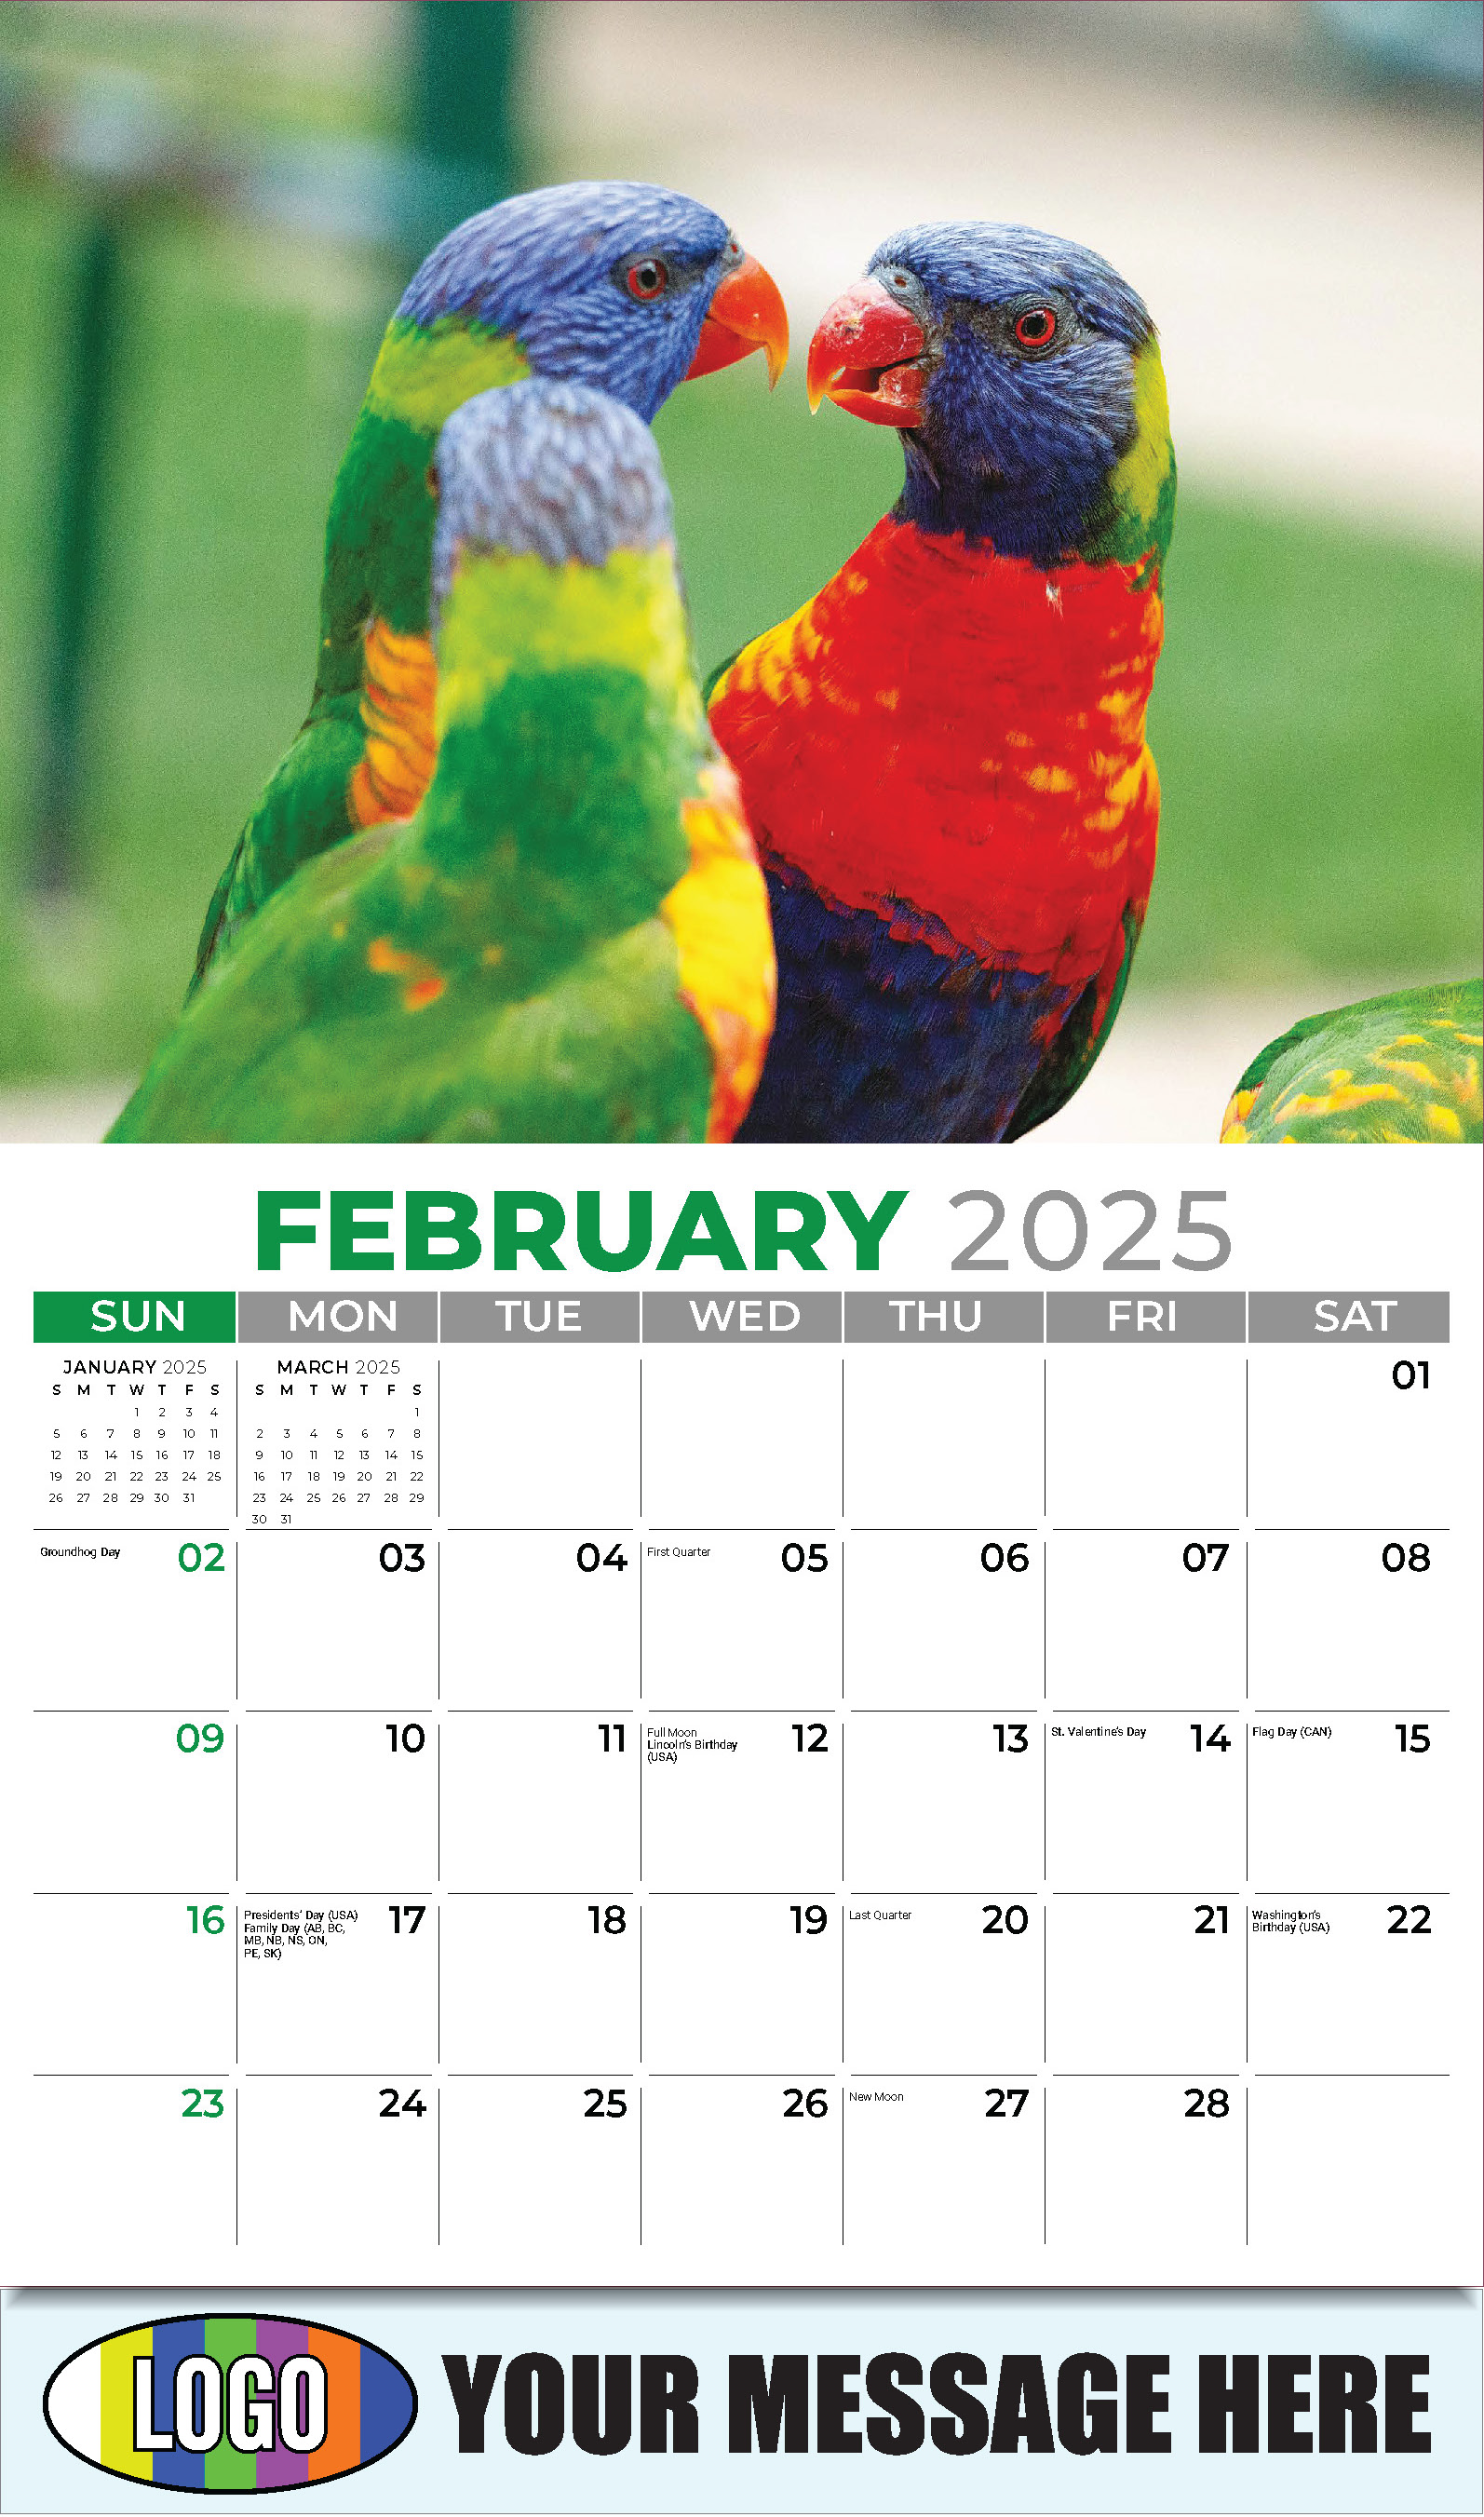 Pets 2025 Business Advertising Wall Calendar - February